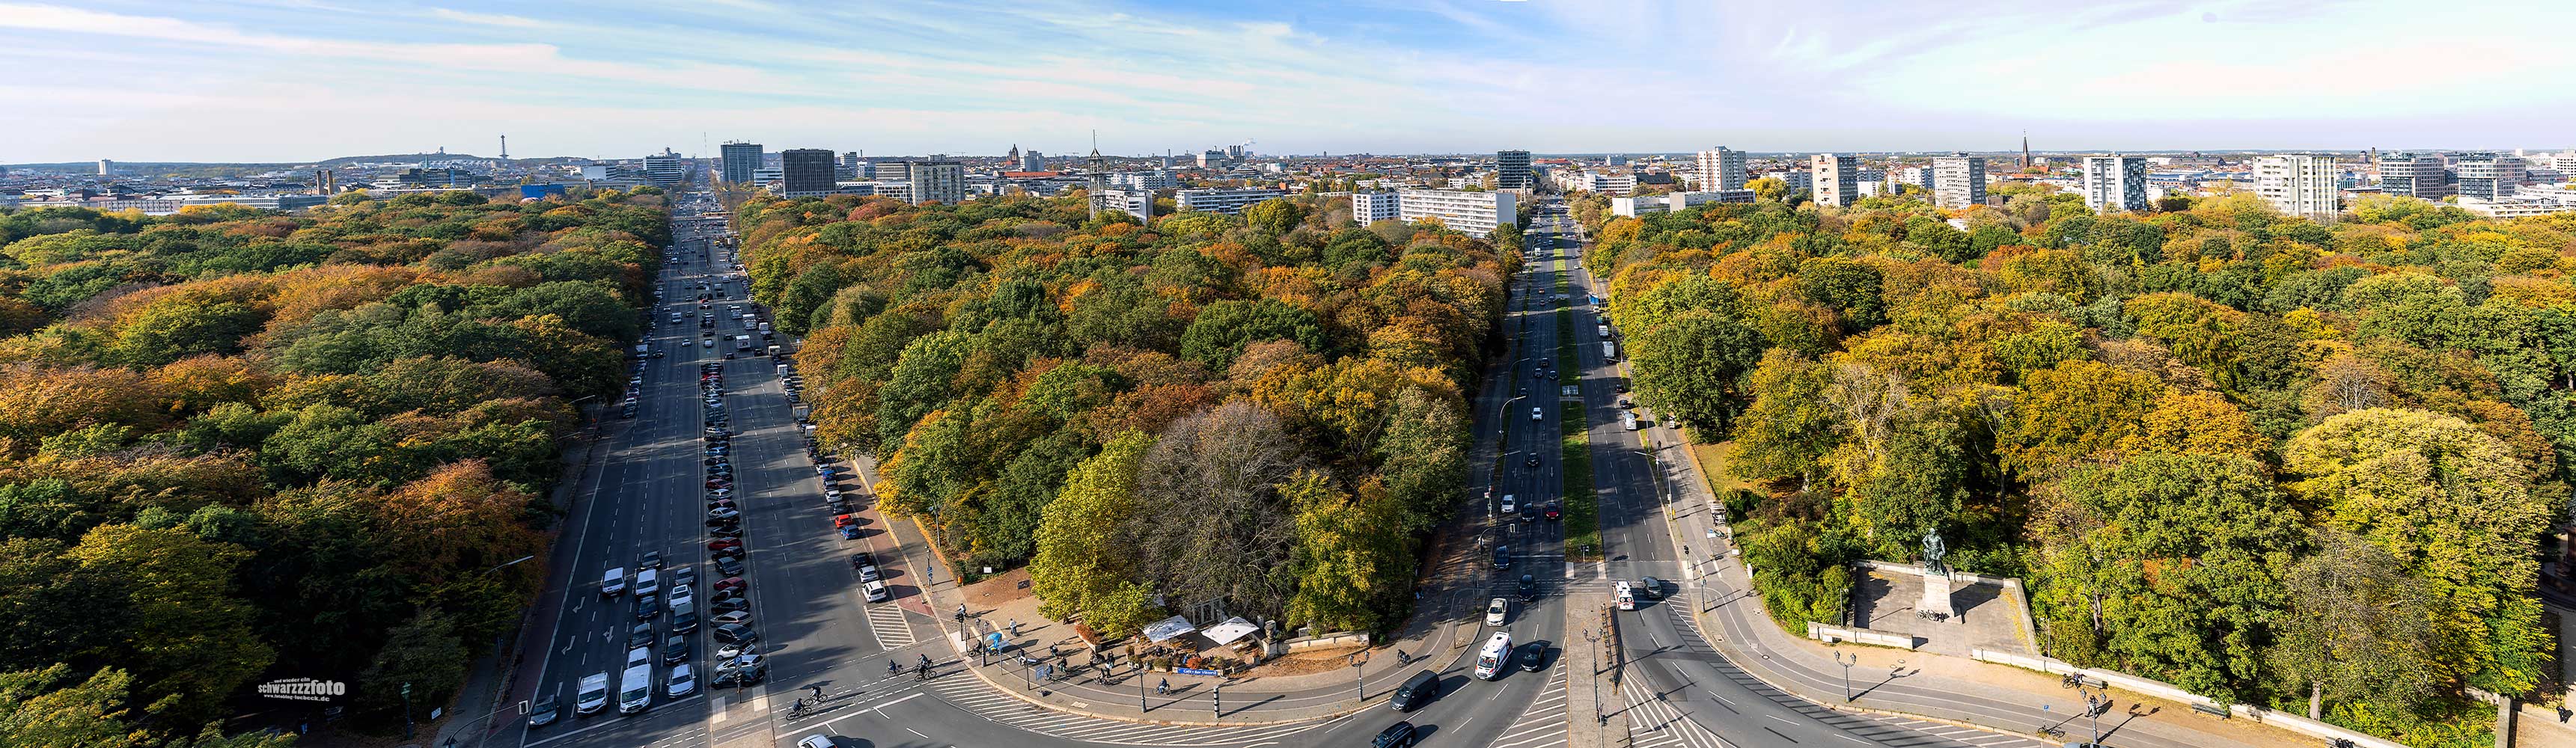 Berlin-Panorama-2